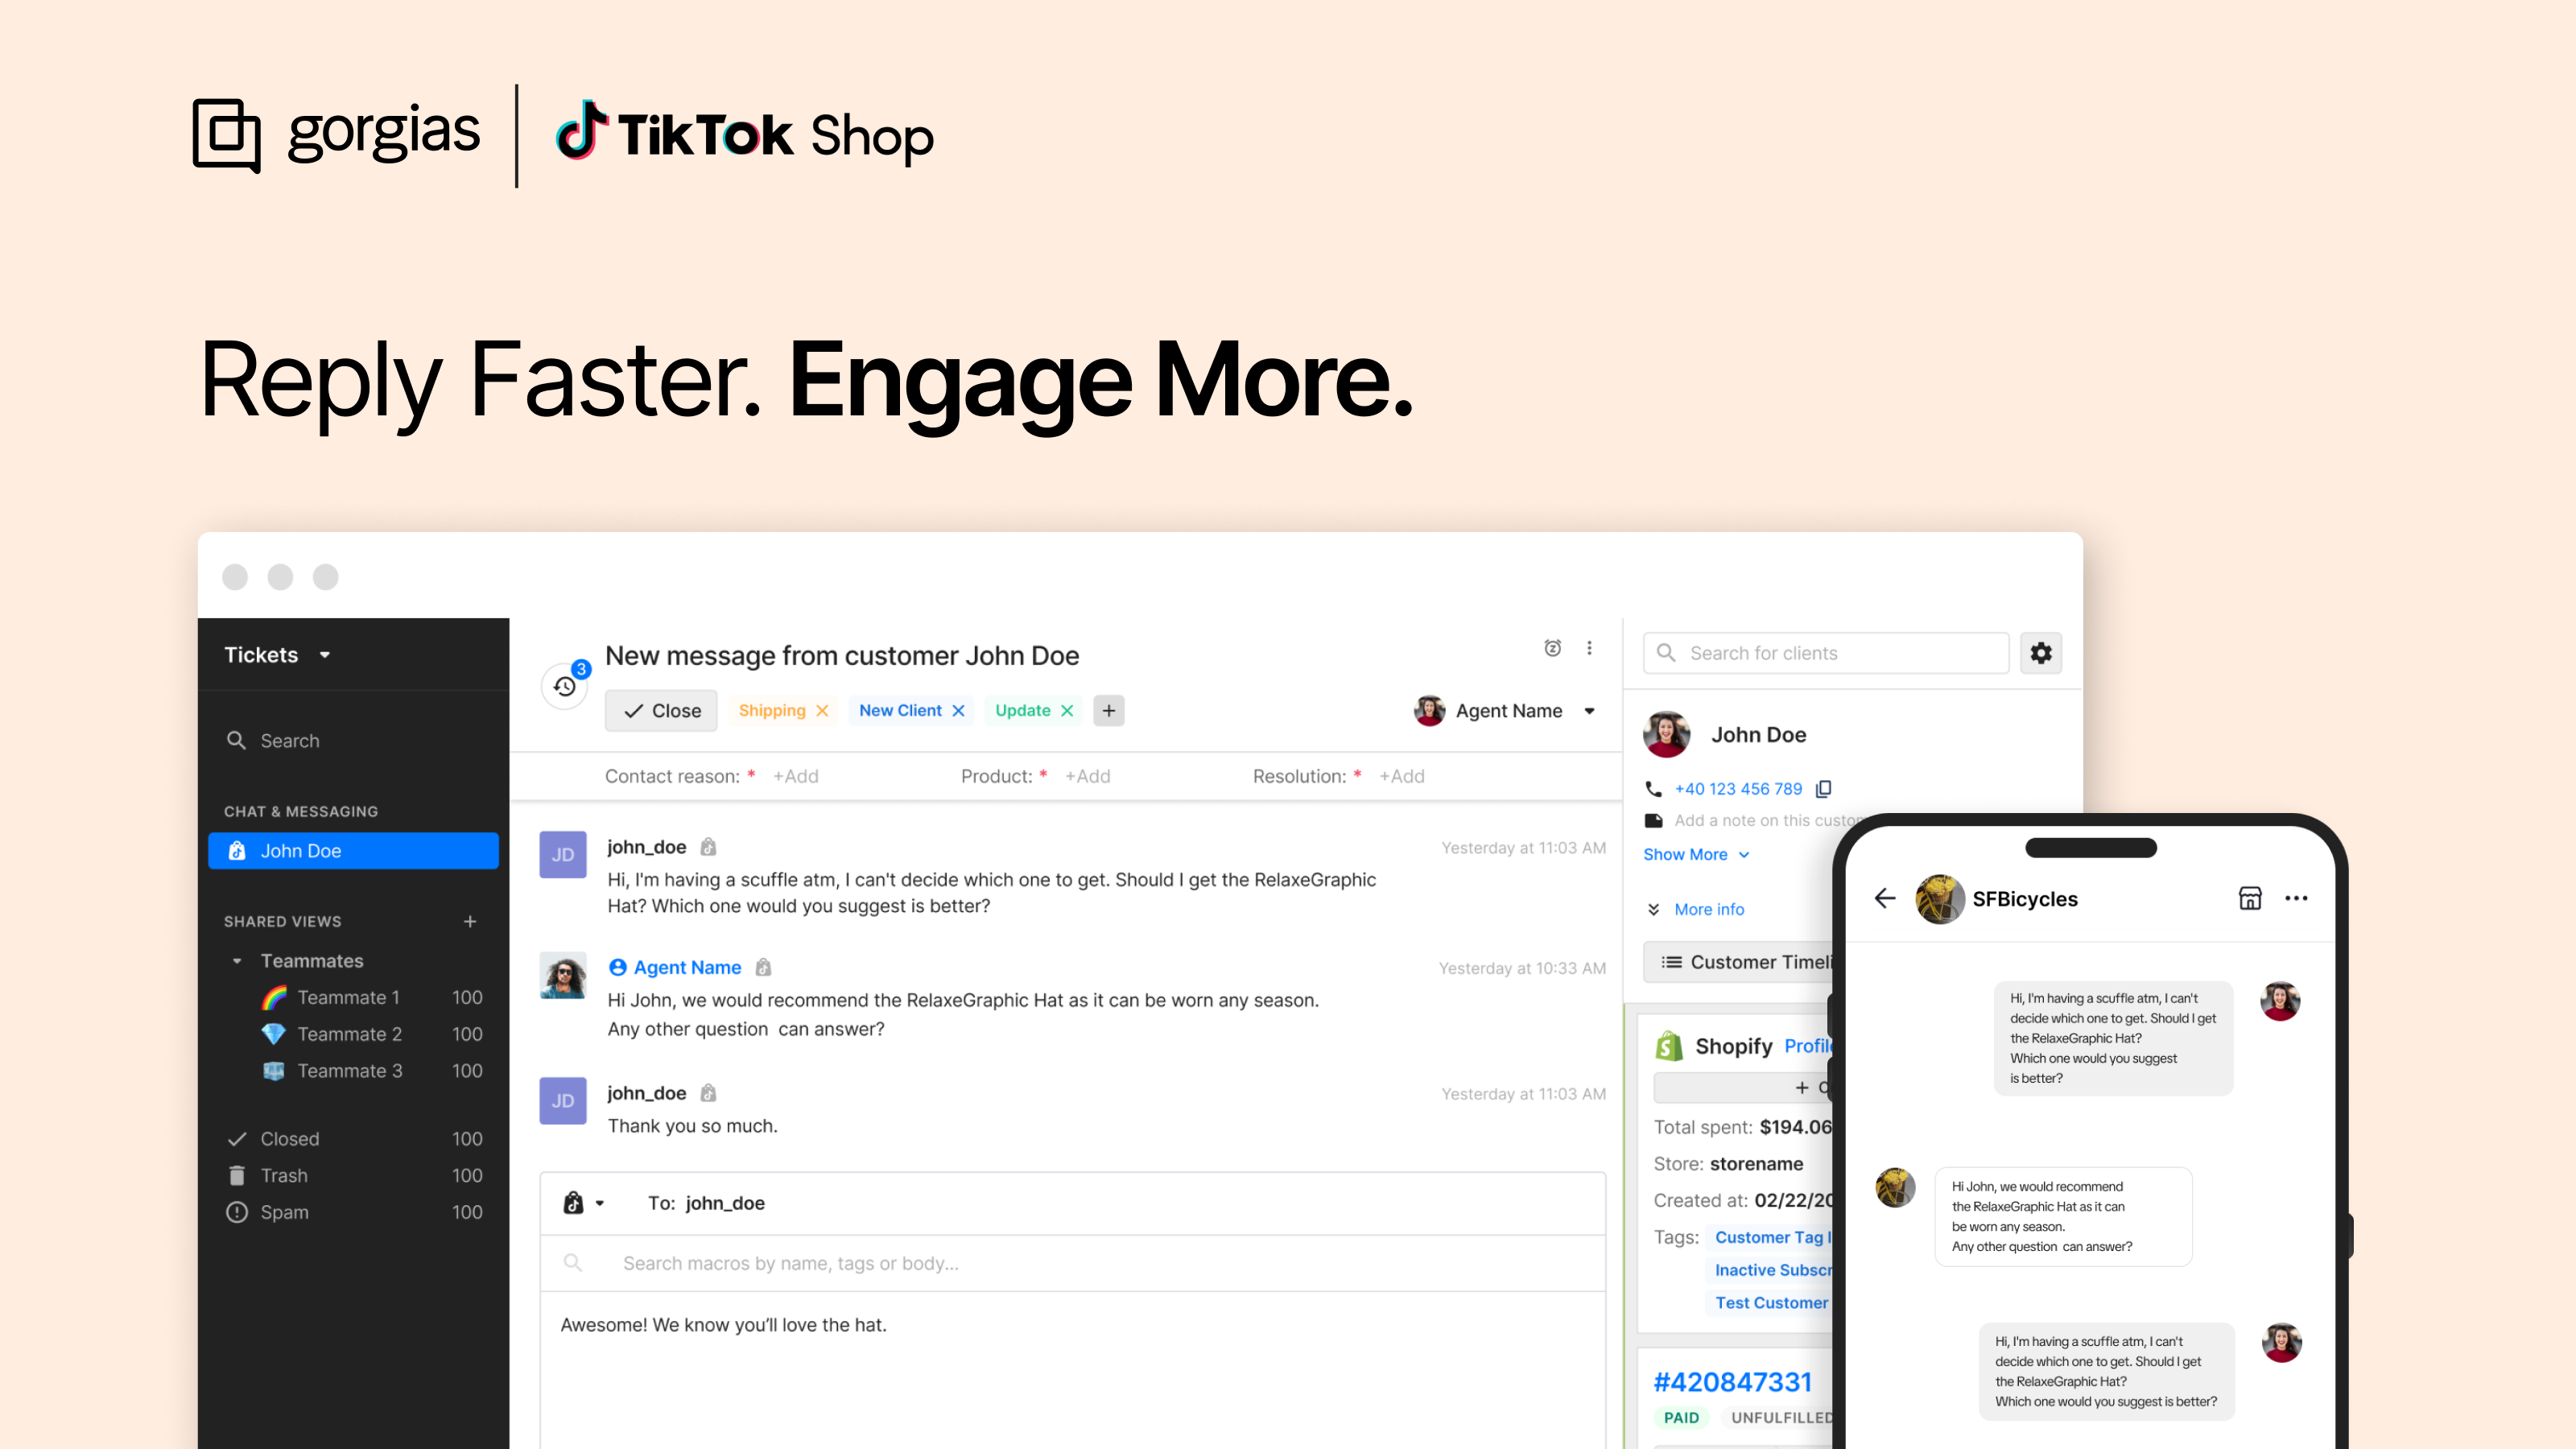 A new integration joins the party: welcome TikTok Shop! â™ª